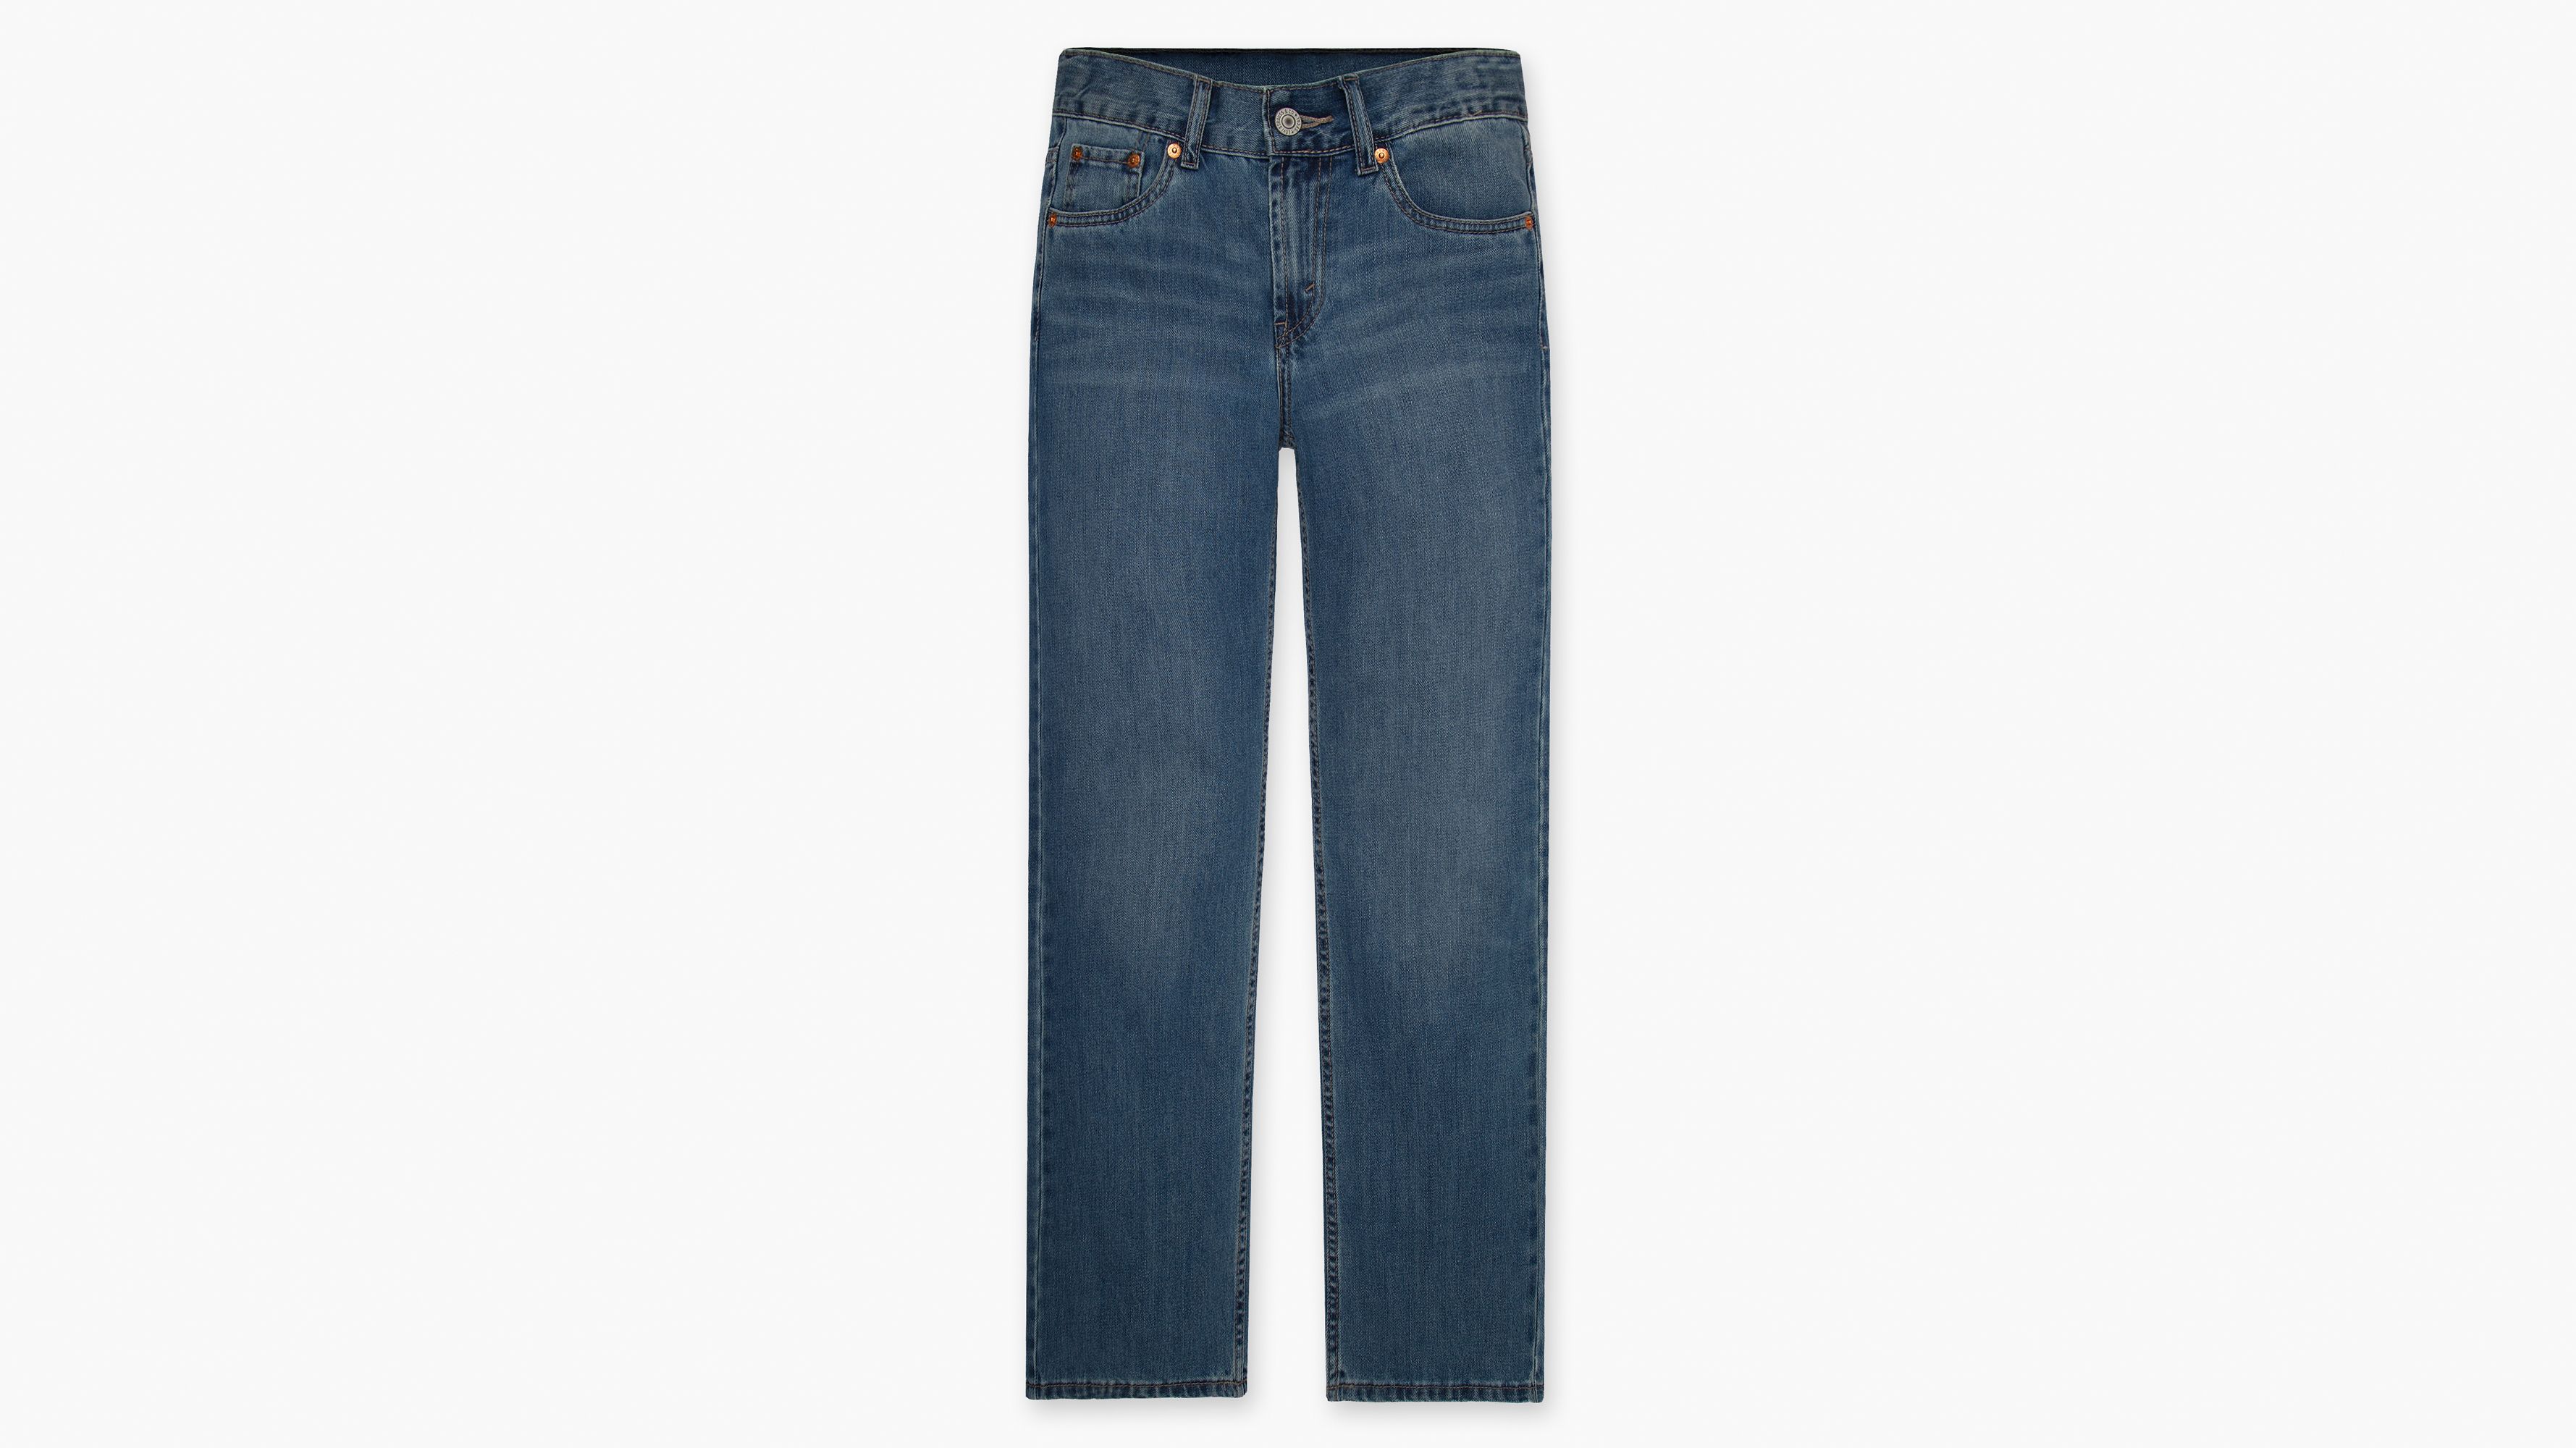 levis 550 husky jeans